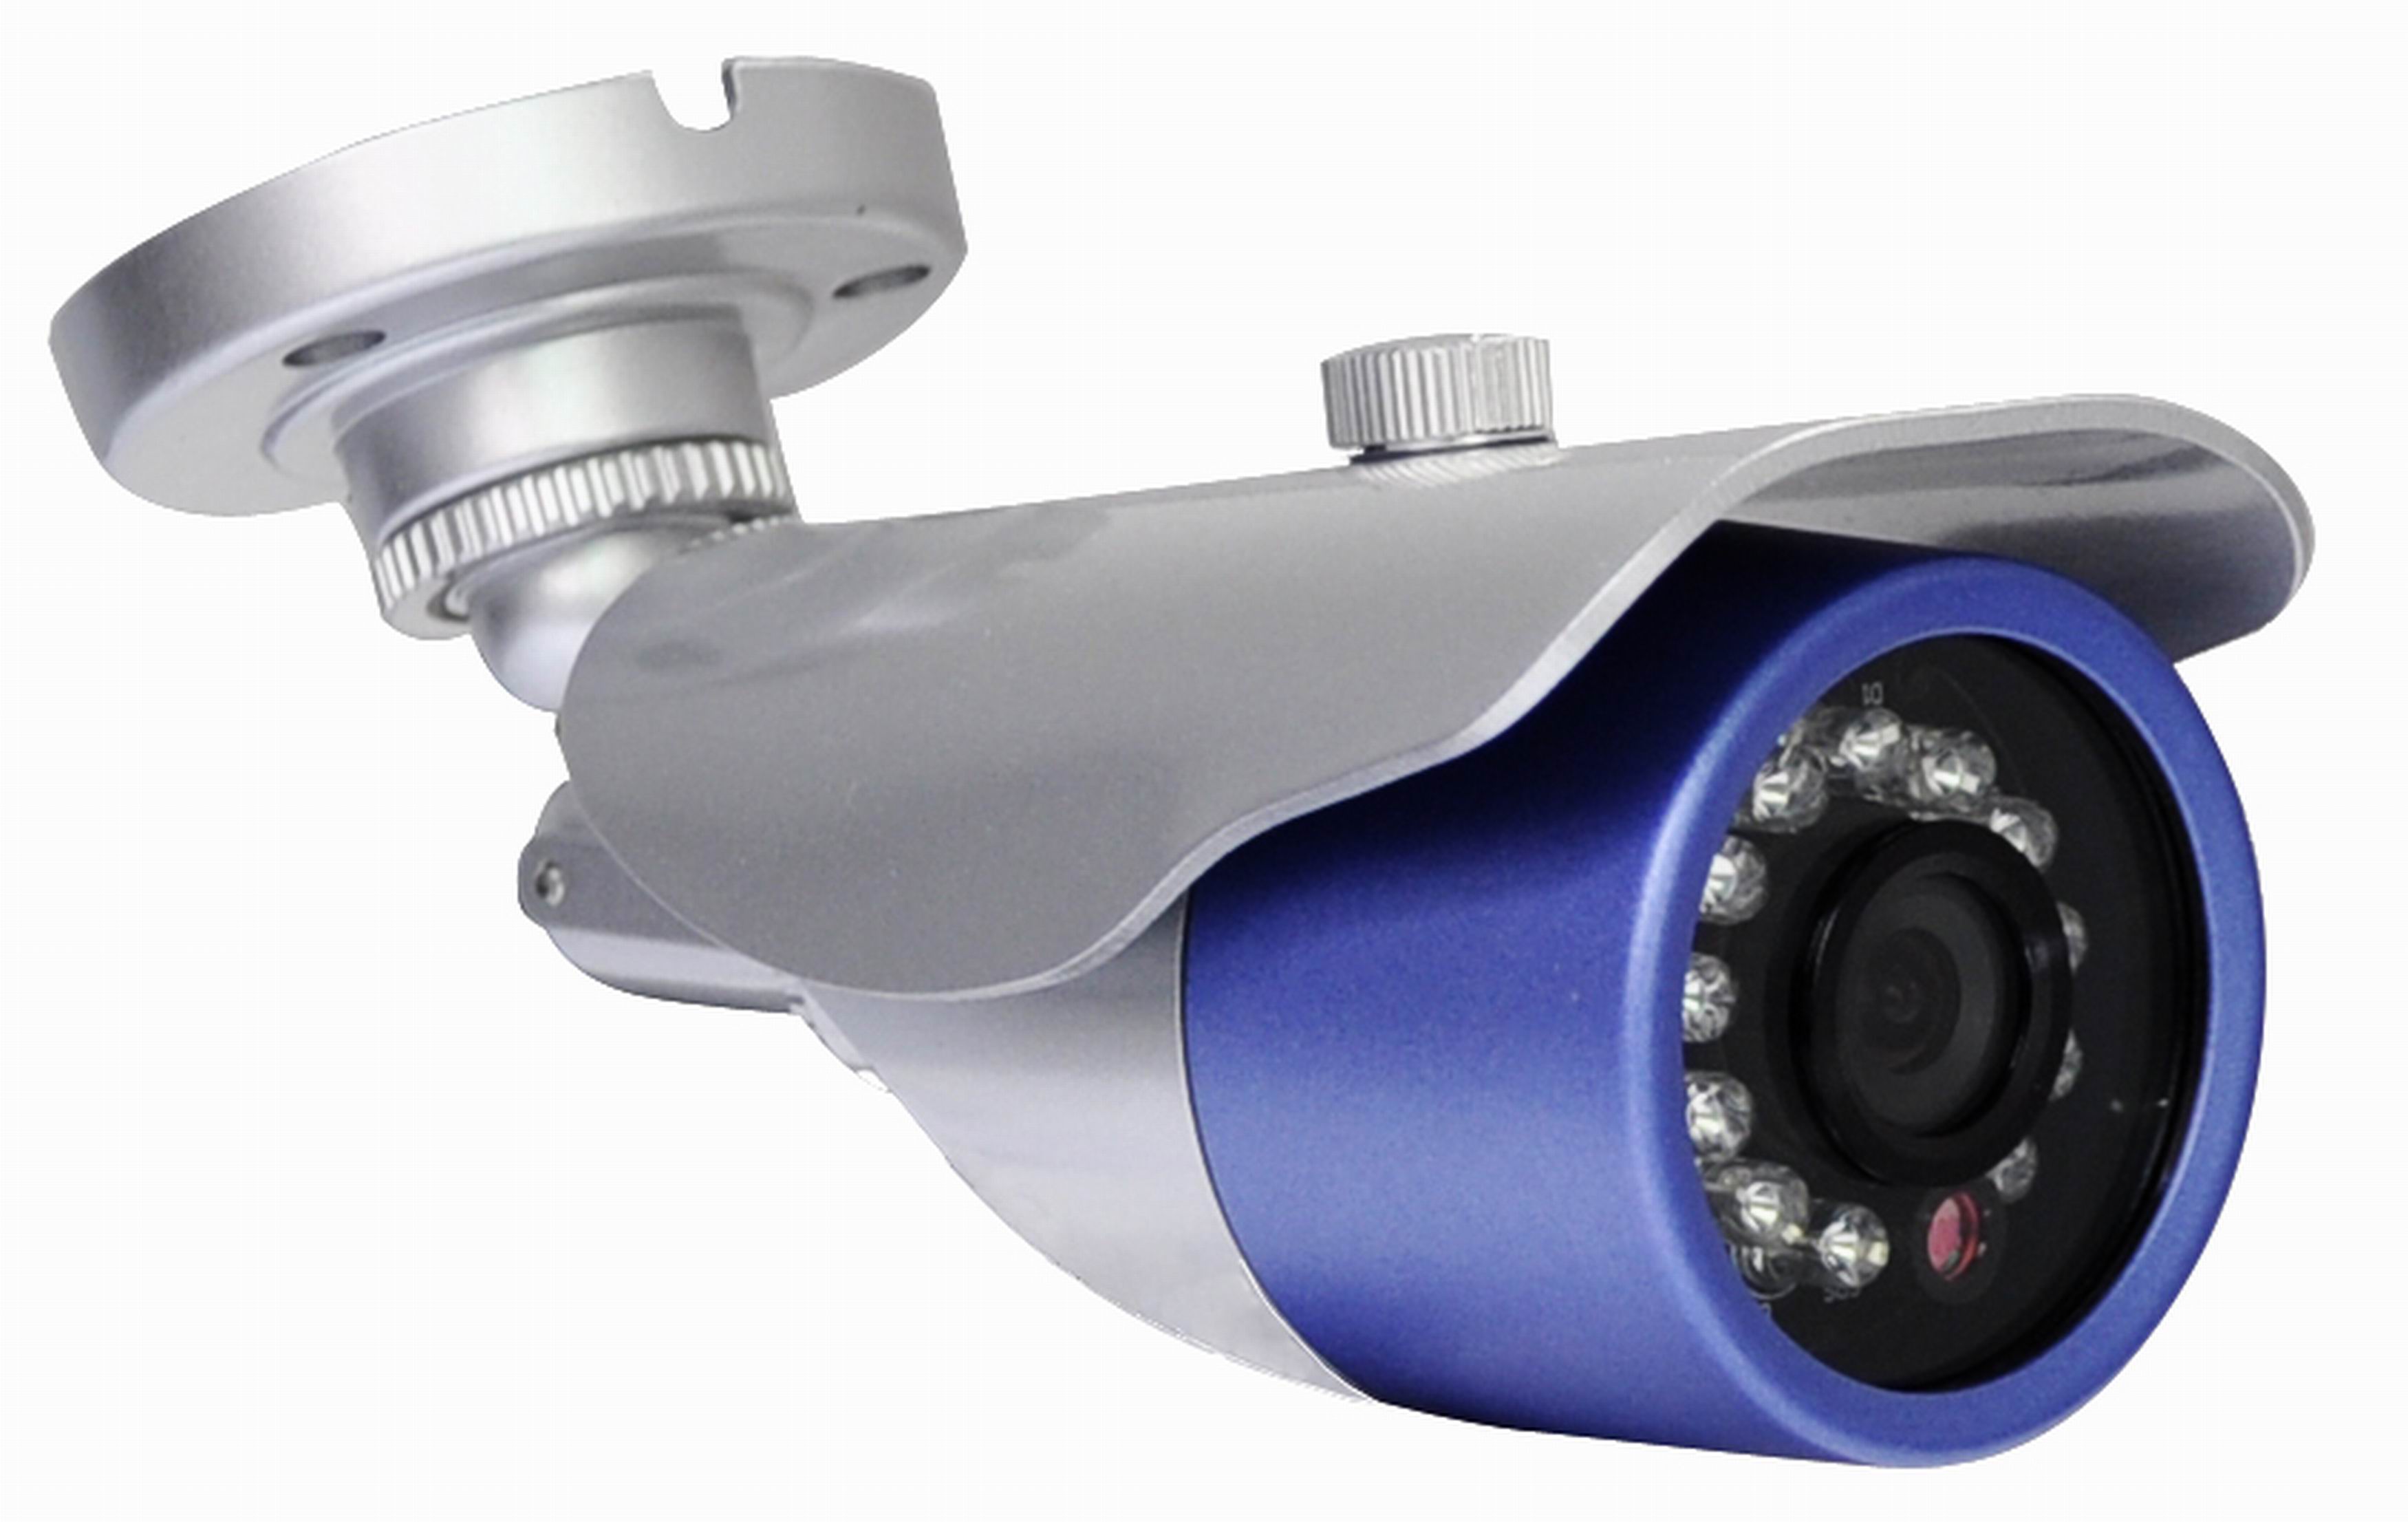 Нестандартные камеры. Камера наружного наблюдения Hikvision. NST-ipx3925 камера видеонаблюдения. Камера наблюдения Iris DF-242sh. CCTV камера 3д.